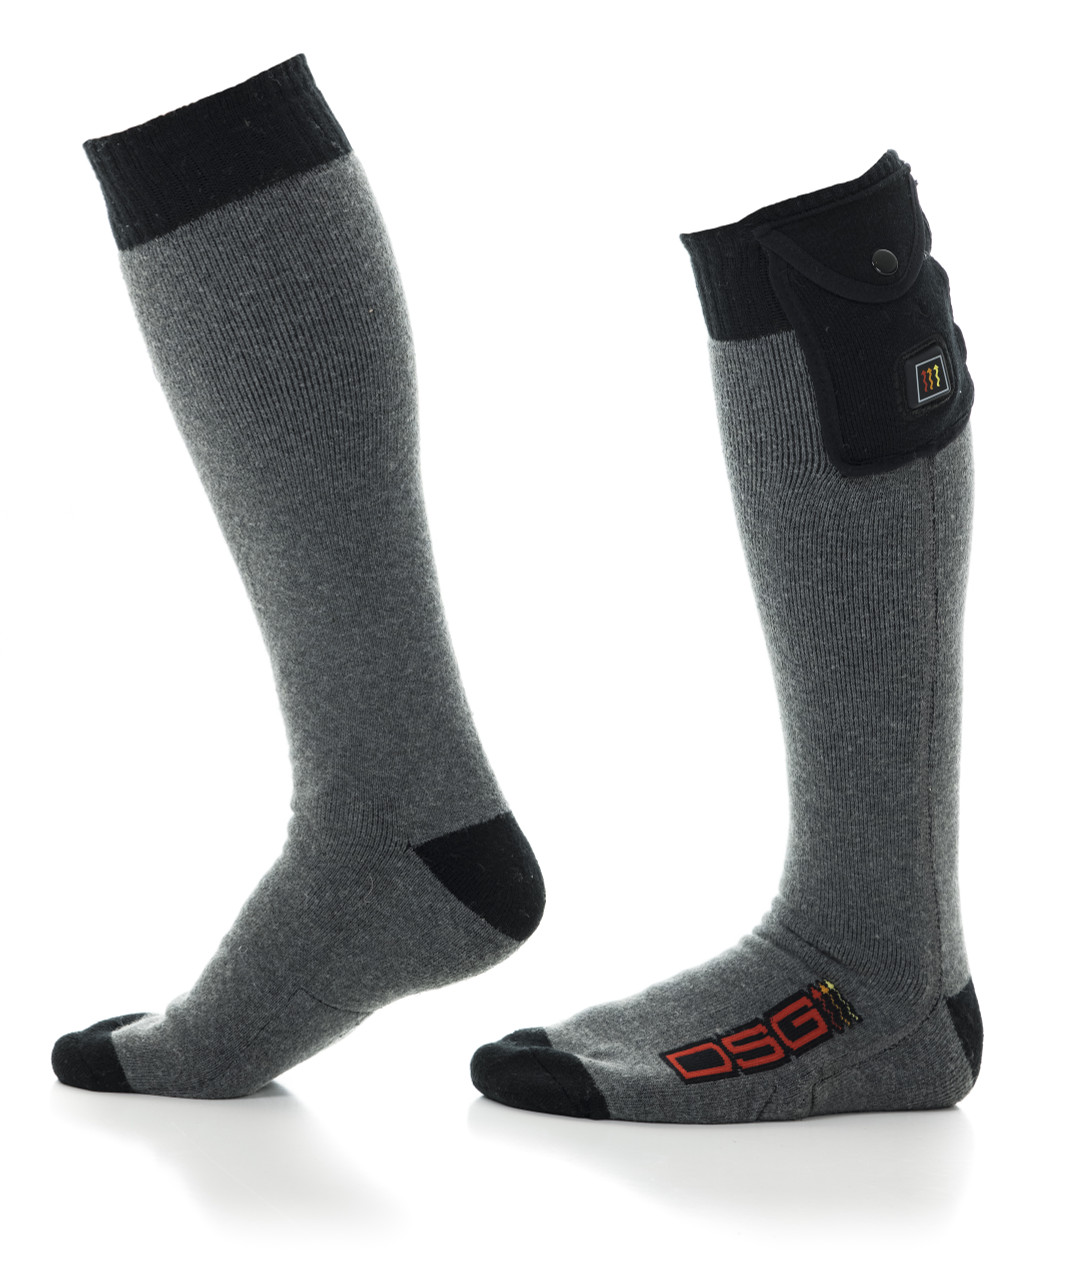 5V 5000mAh Heated Socks 4 Gears Adjustable Electric Socks for Men Wome -  AlieZack